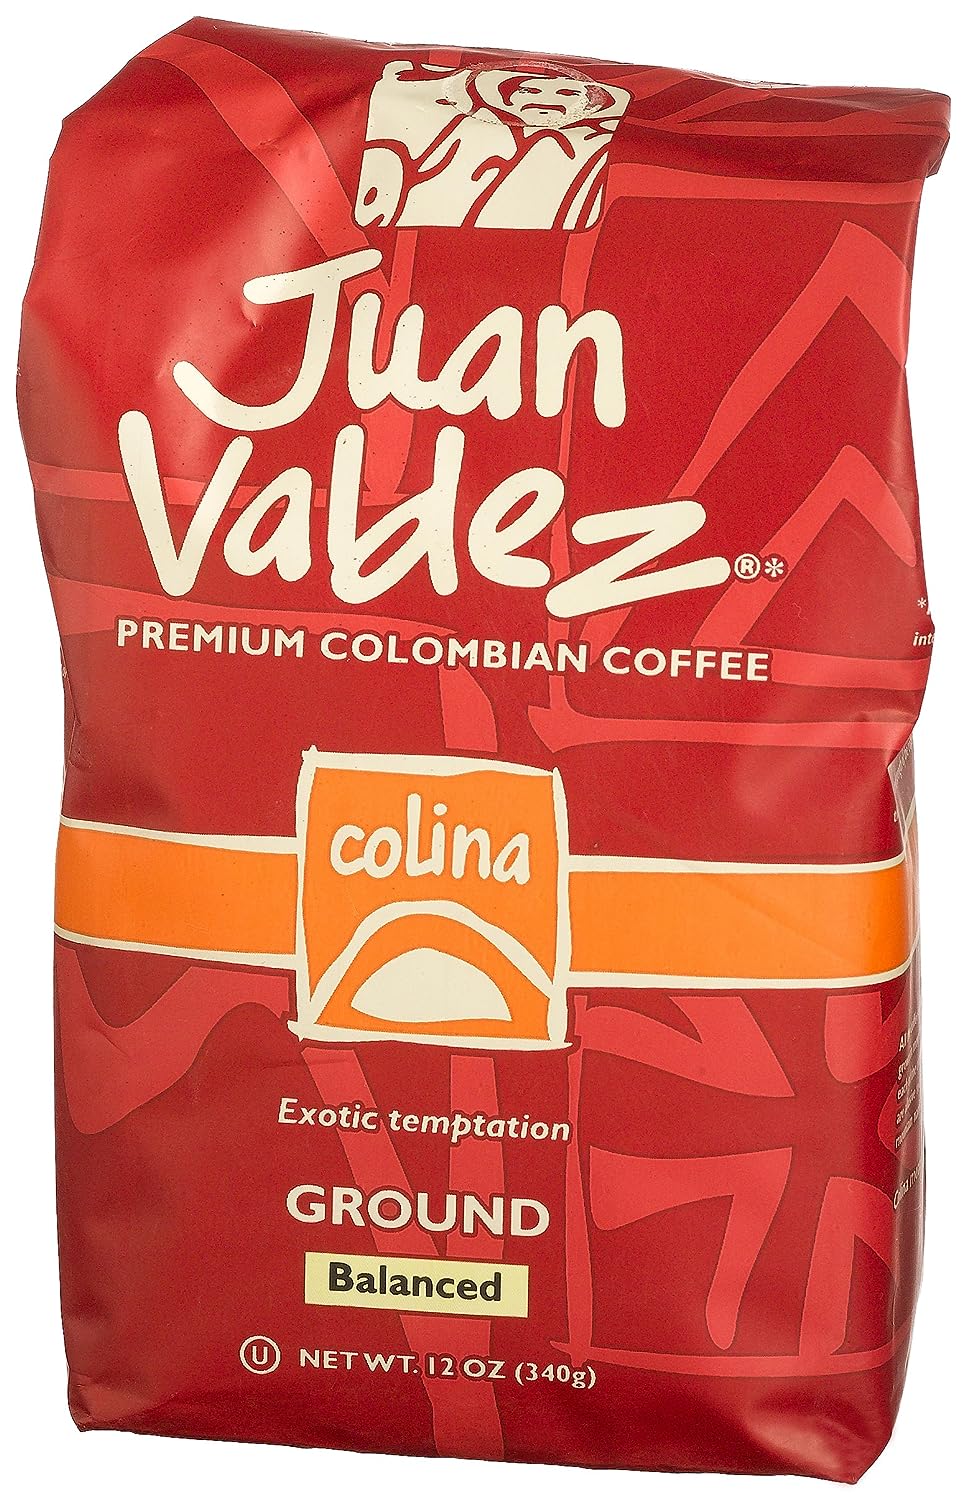 Juan Valdez Premium Colombian Coffee, Colina (Balanced) Ground Coffee Bags